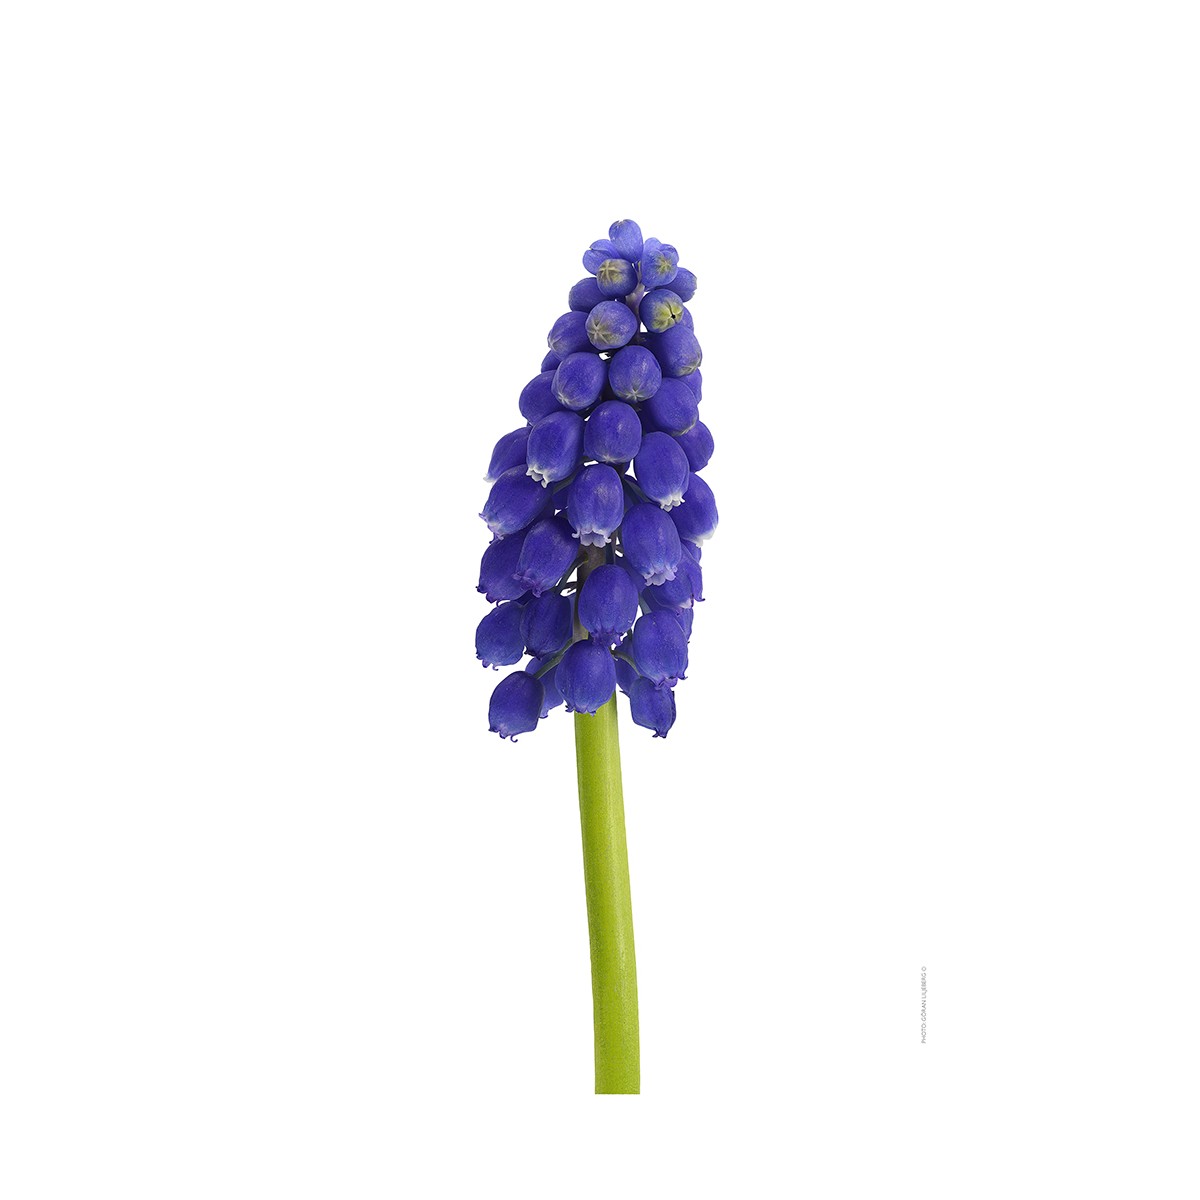 Hyacinth (Muscari botryoides)